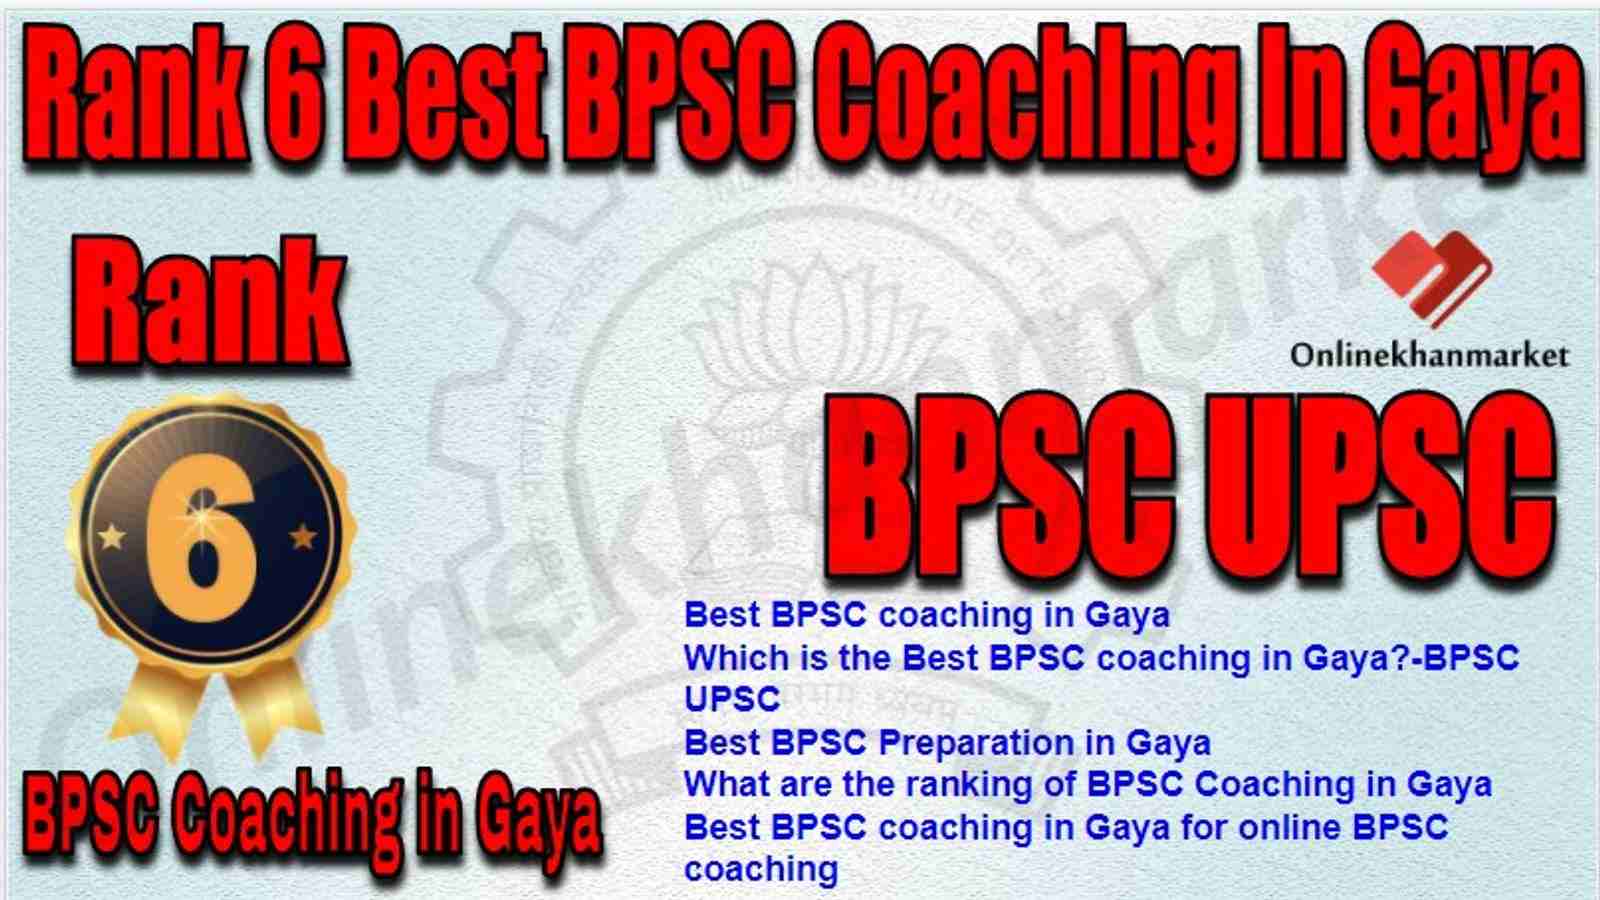 Rank 6 Best BPSC Coaching in gaya